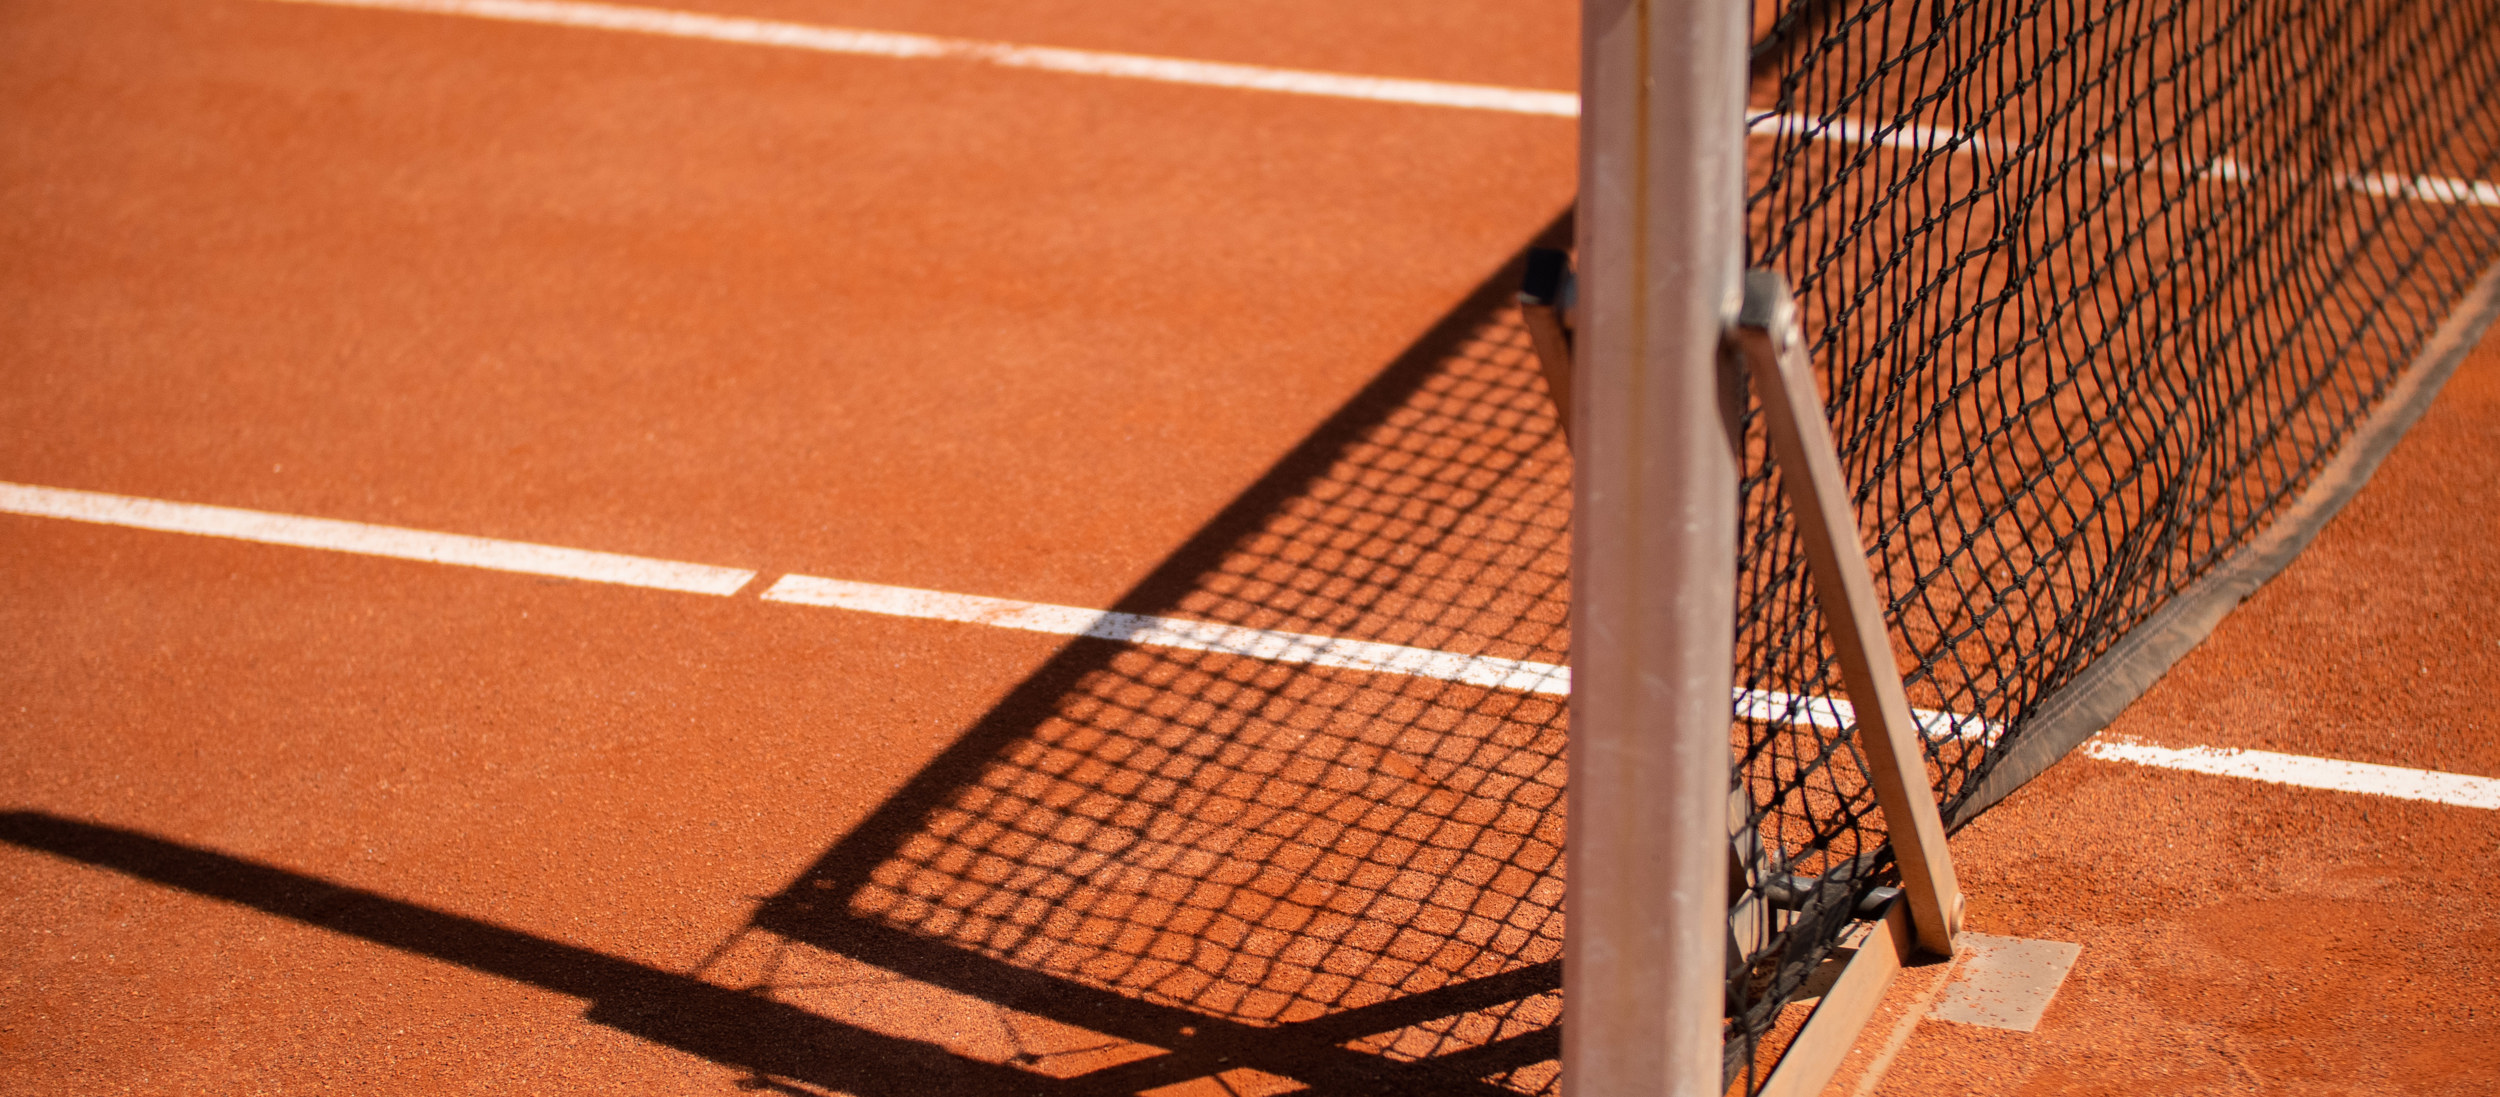 Tennisbaan lijnen netpaal